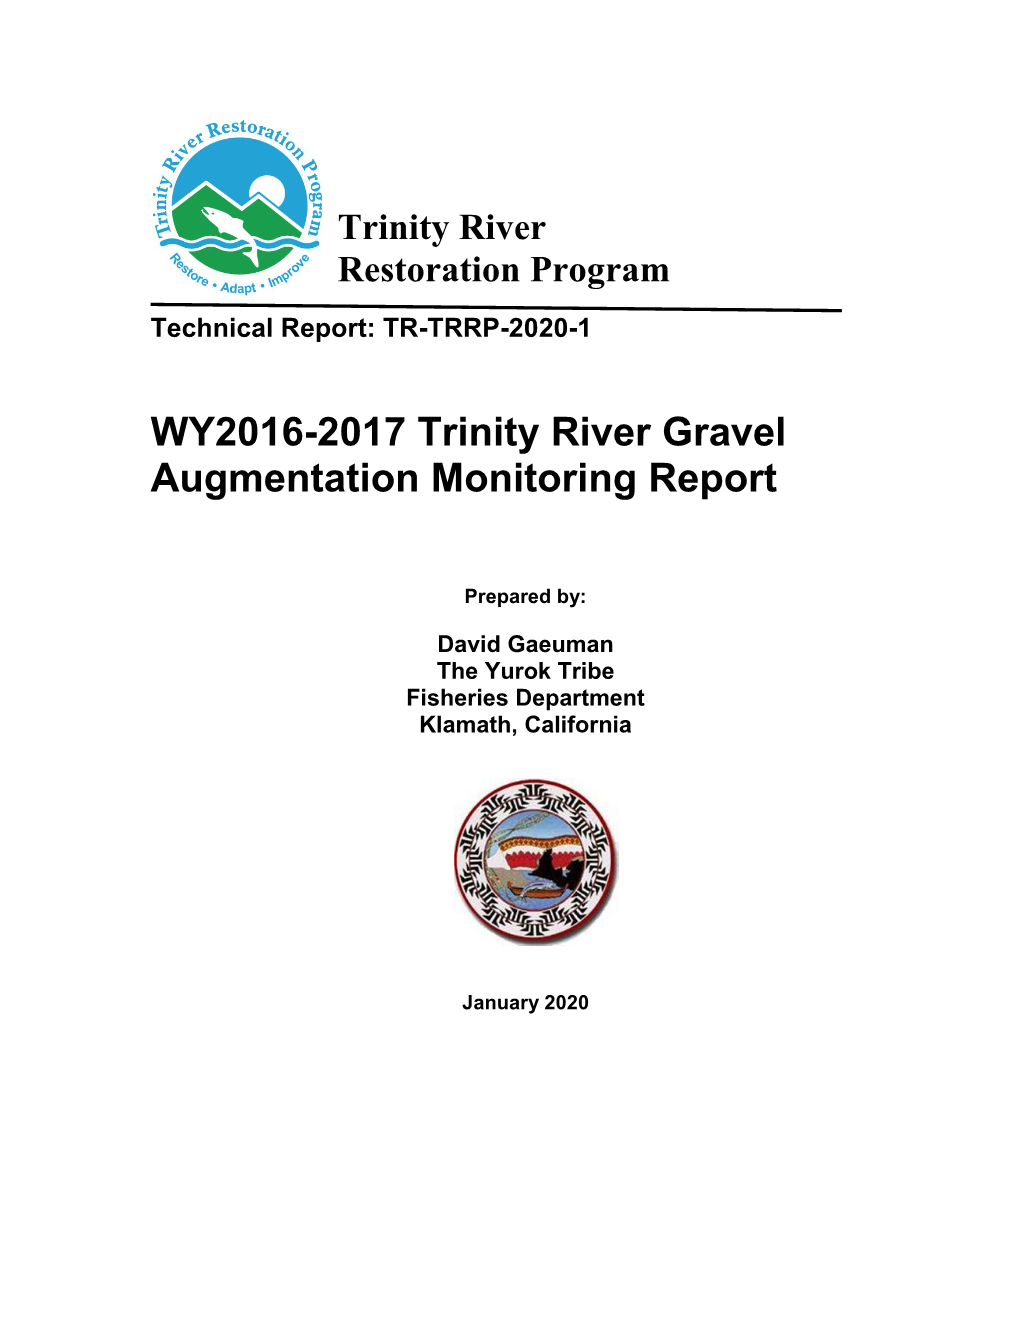 WY2016-2017 Trinity River Gravel Augmentation Monitoring Report